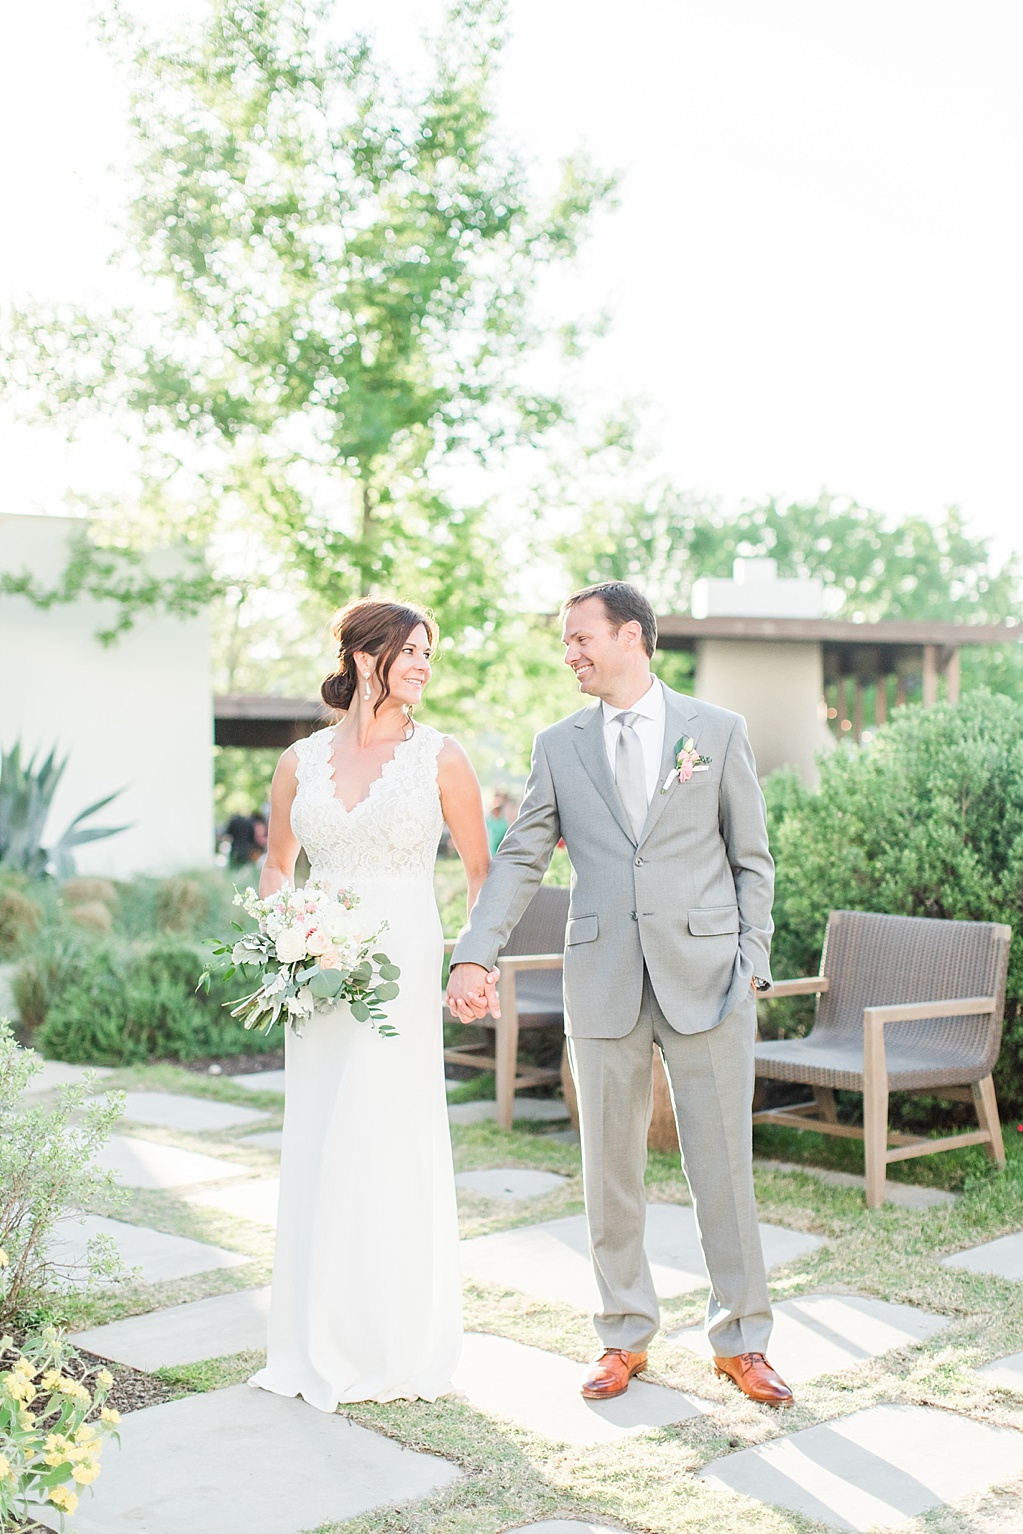 A Classic Minimalist Blush and gold greenery wedding at La Cantera Resort and Spa in San Antonio Texas 0085